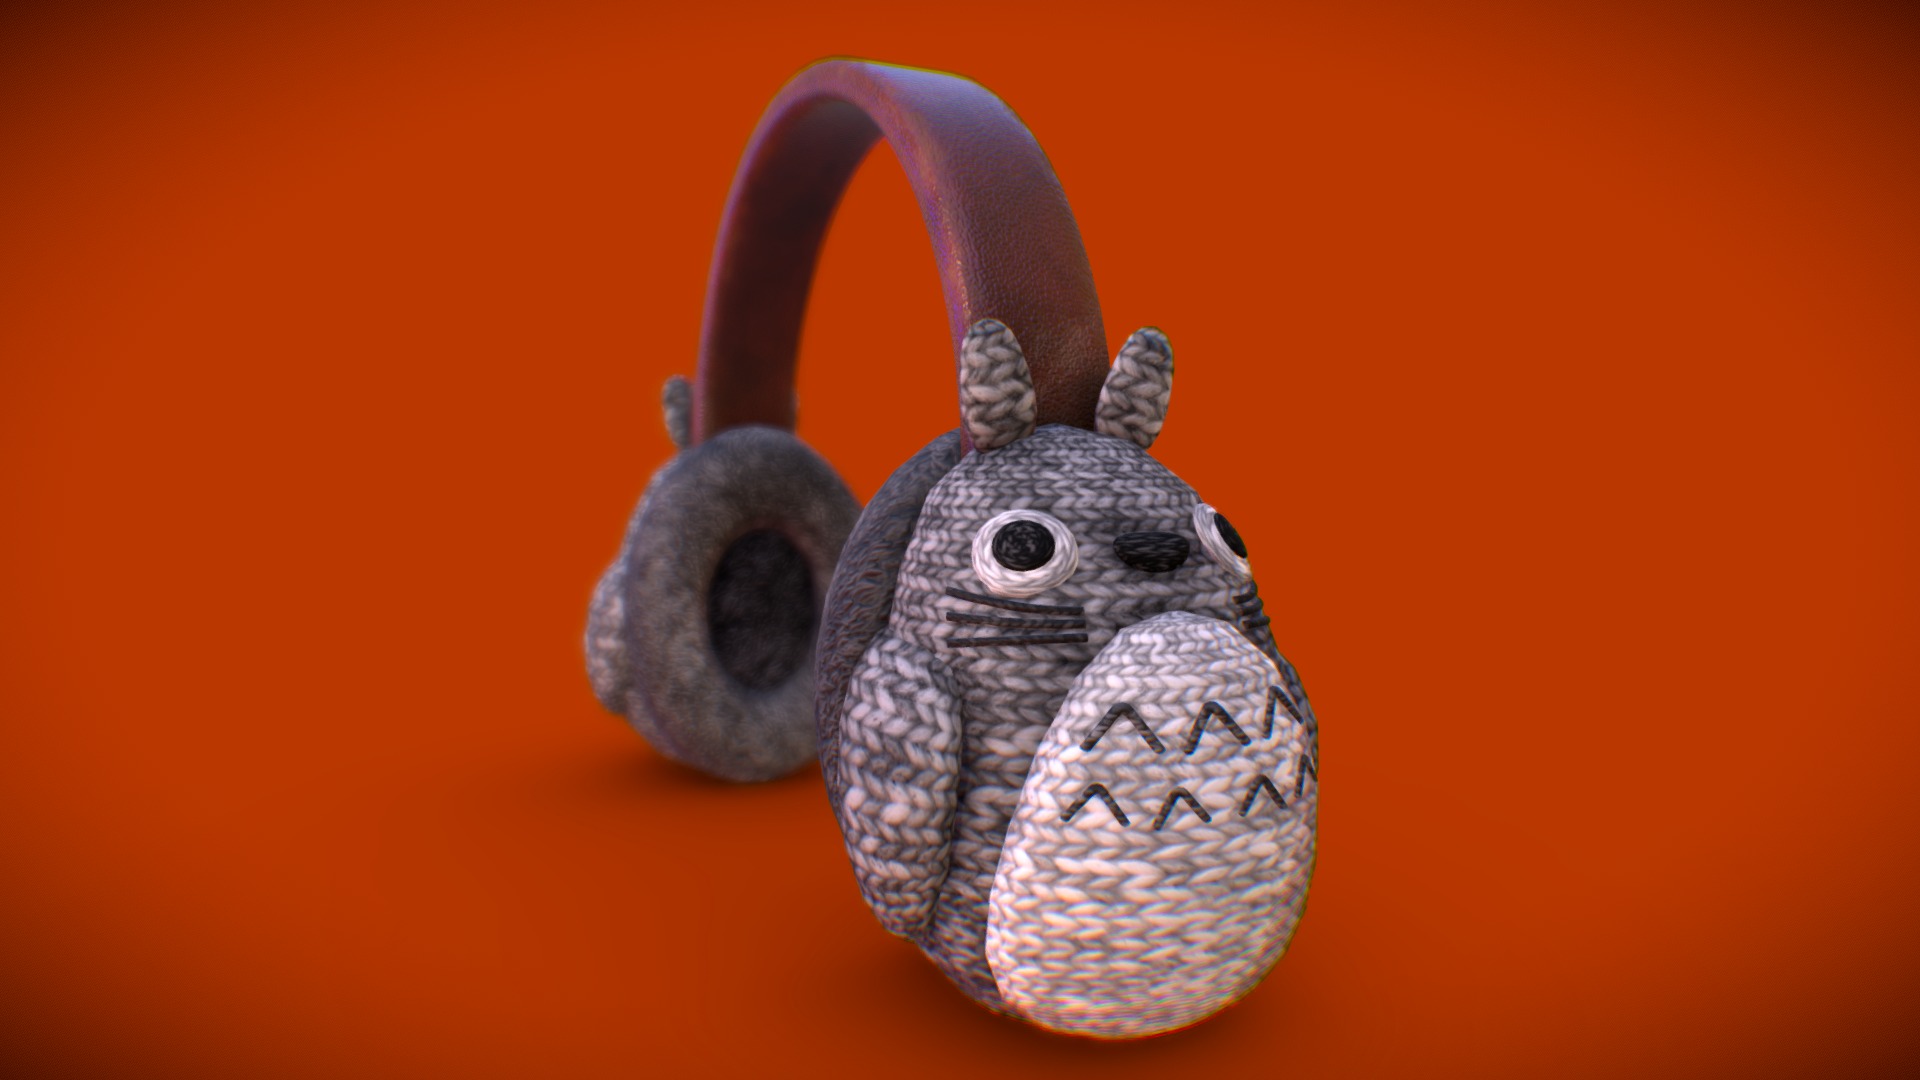 3D model #3December #Day8 The Whisper of Totoro - This is a 3D model of the #3December #Day8 The Whisper of Totoro. The 3D model is about a snake with a long tail.